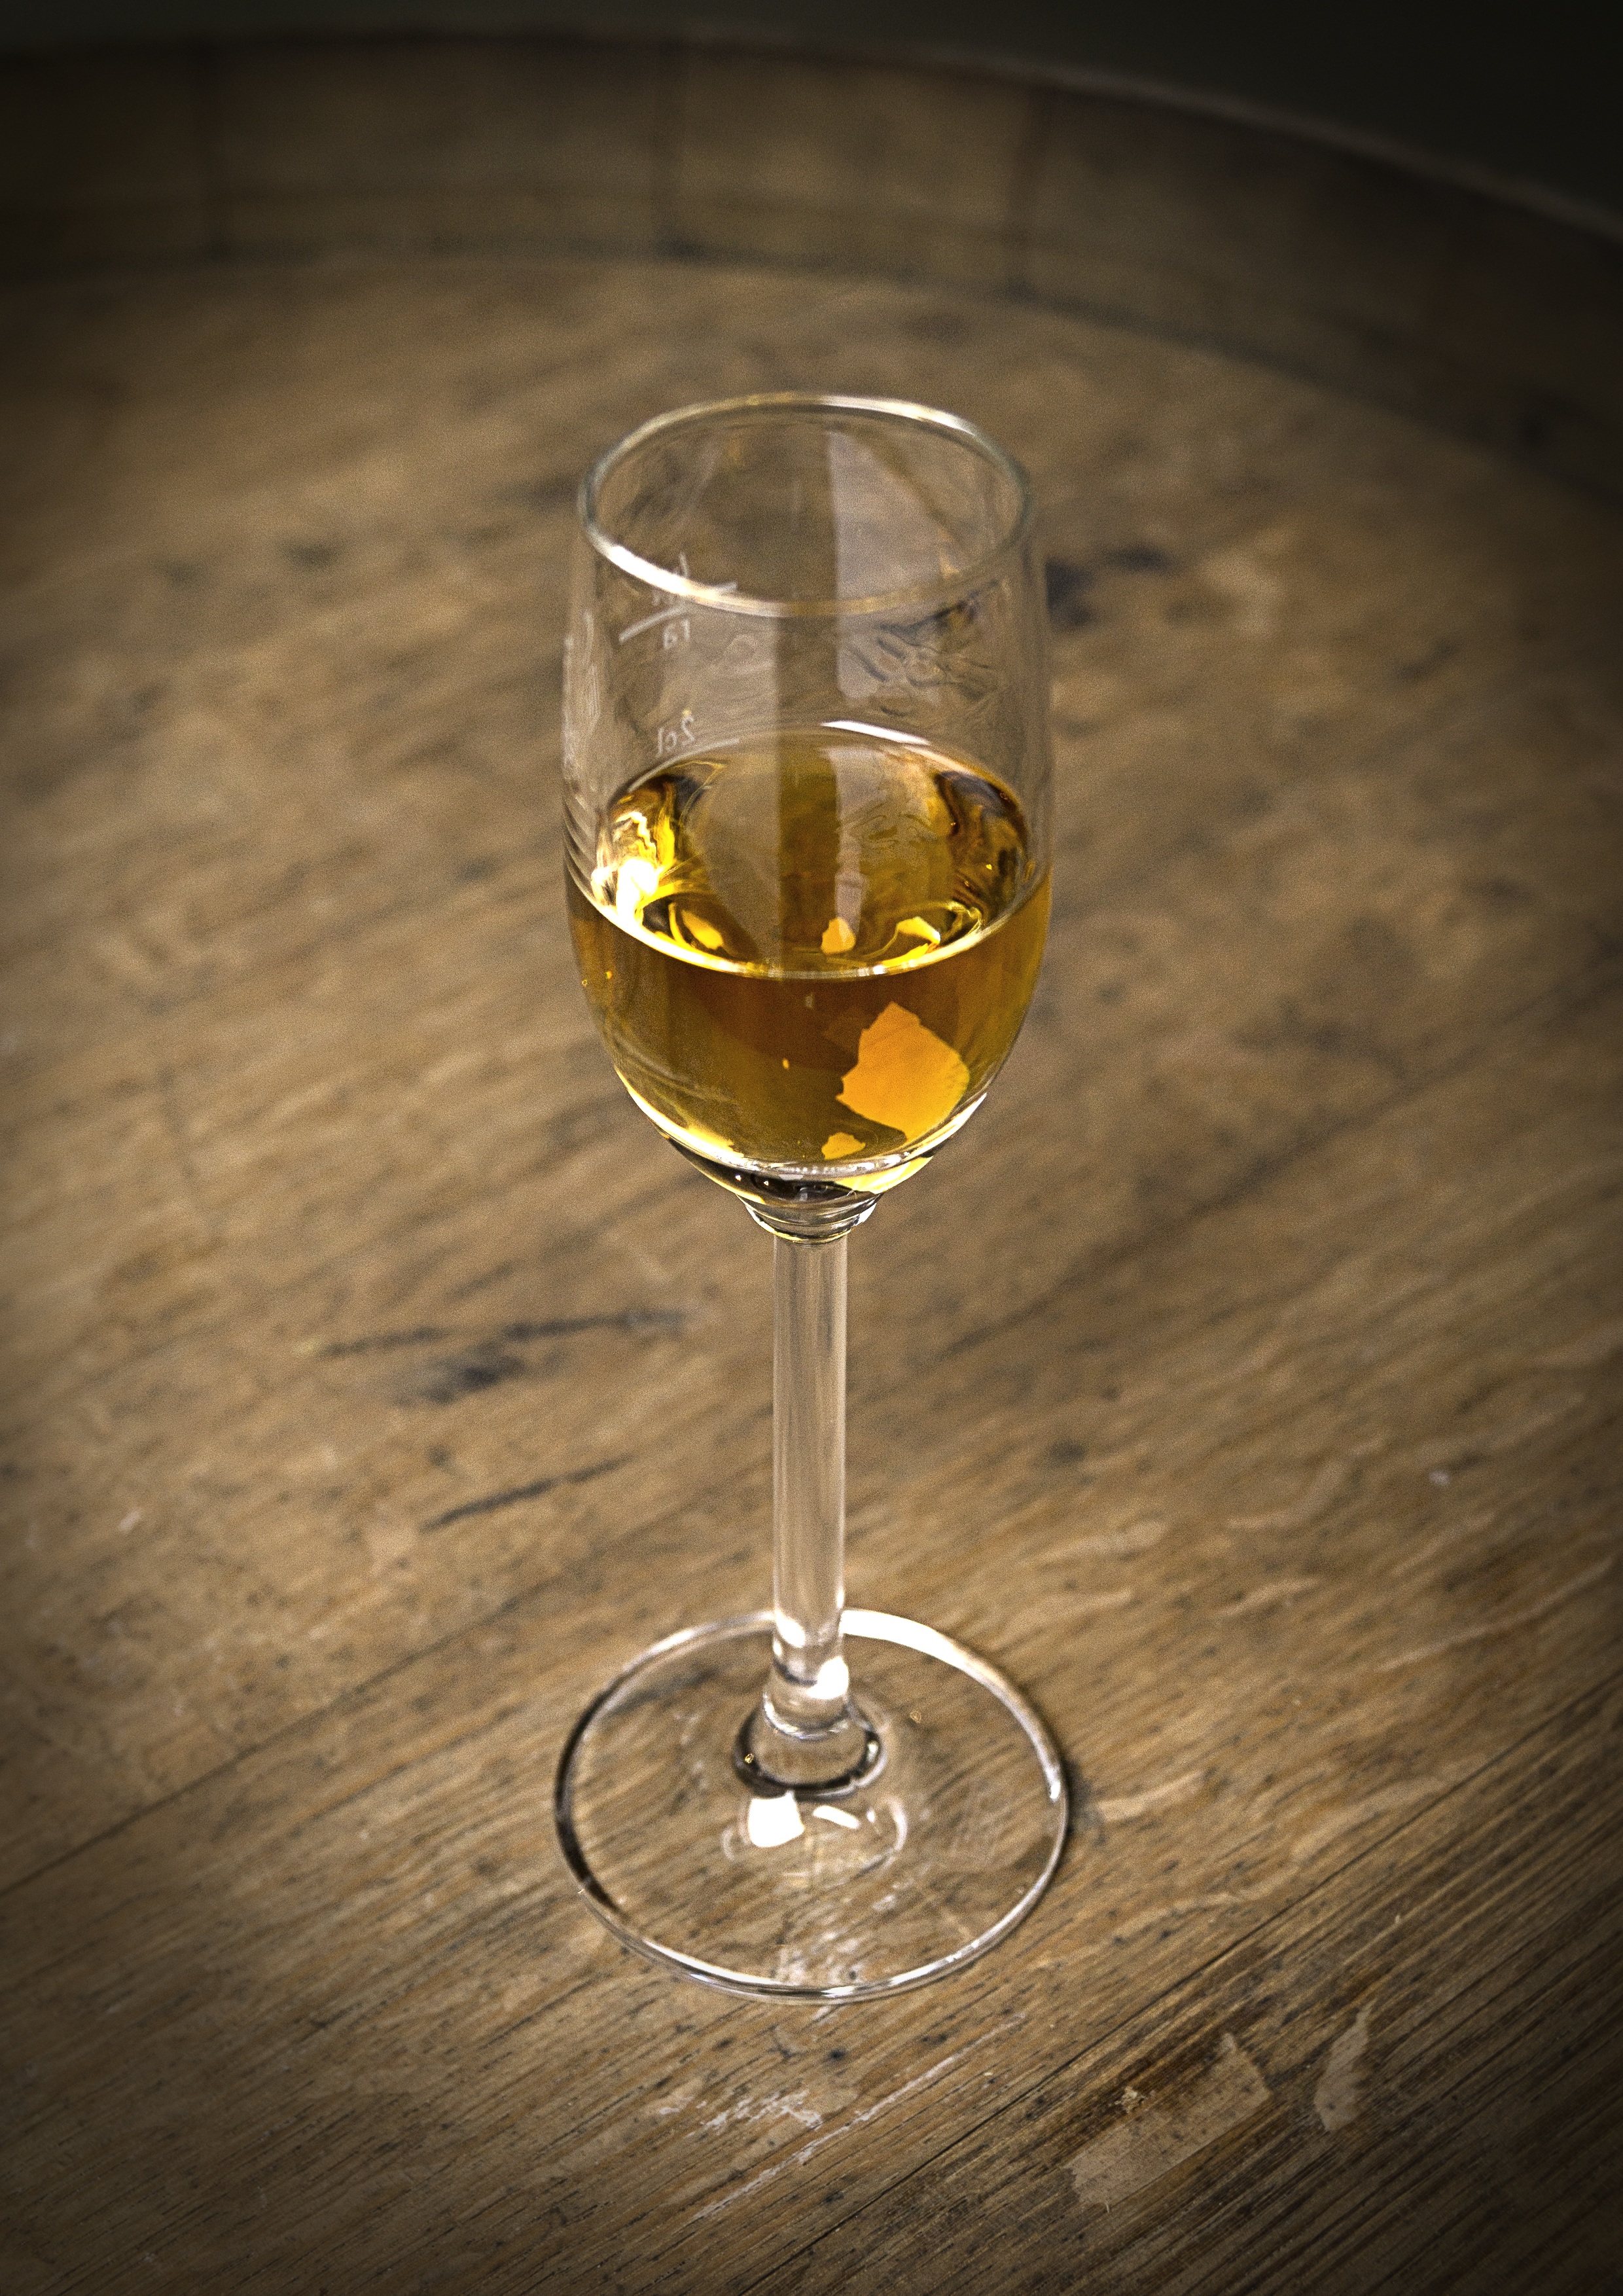 DeCavo Höhlenwhisky 50 ml 47,3% Vol.